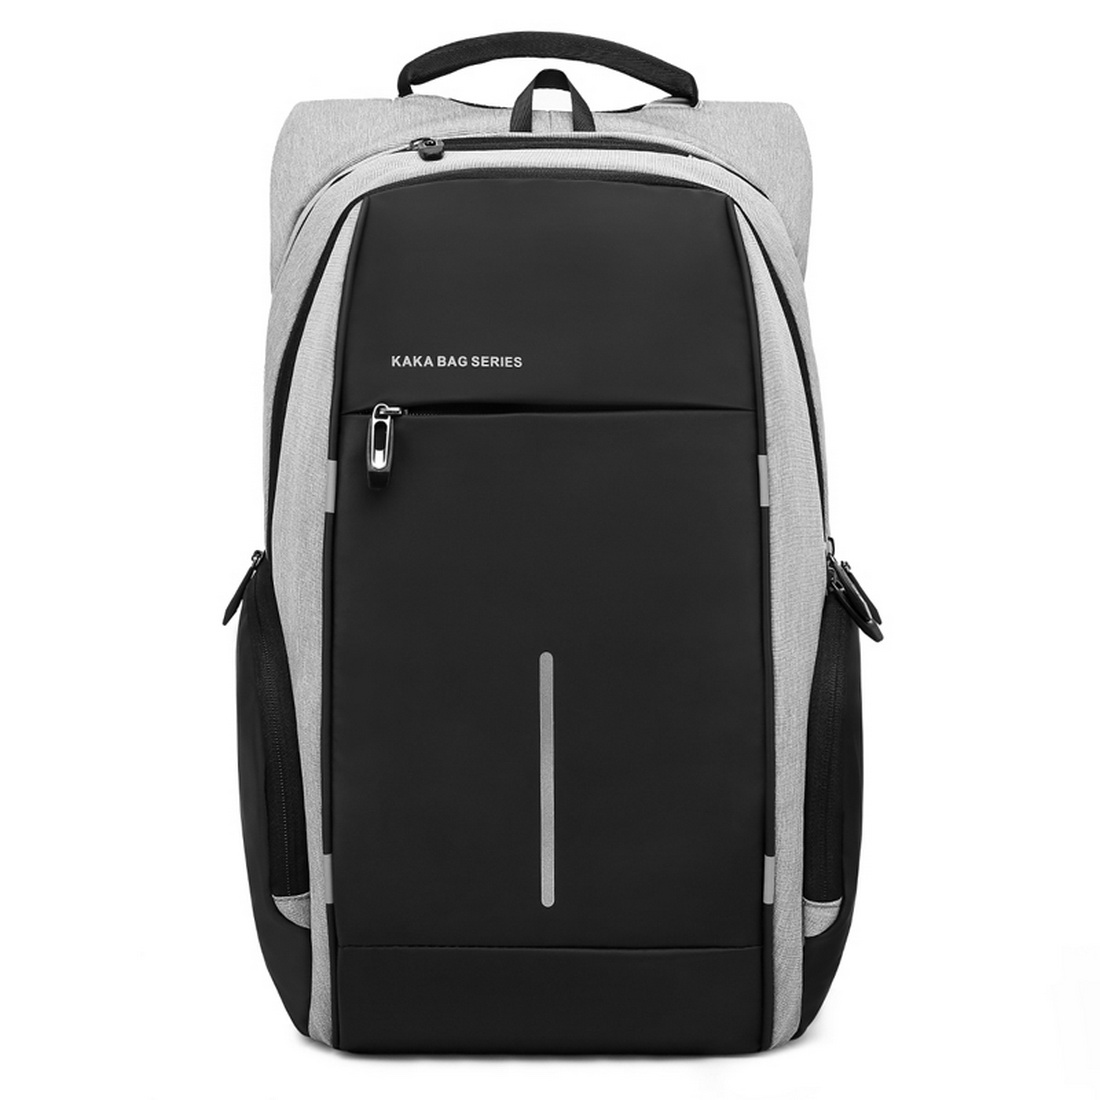 Joymoze Waterproof Oxford Backpack Fashion Casual Laptop Bag for Men and Women Grey 847